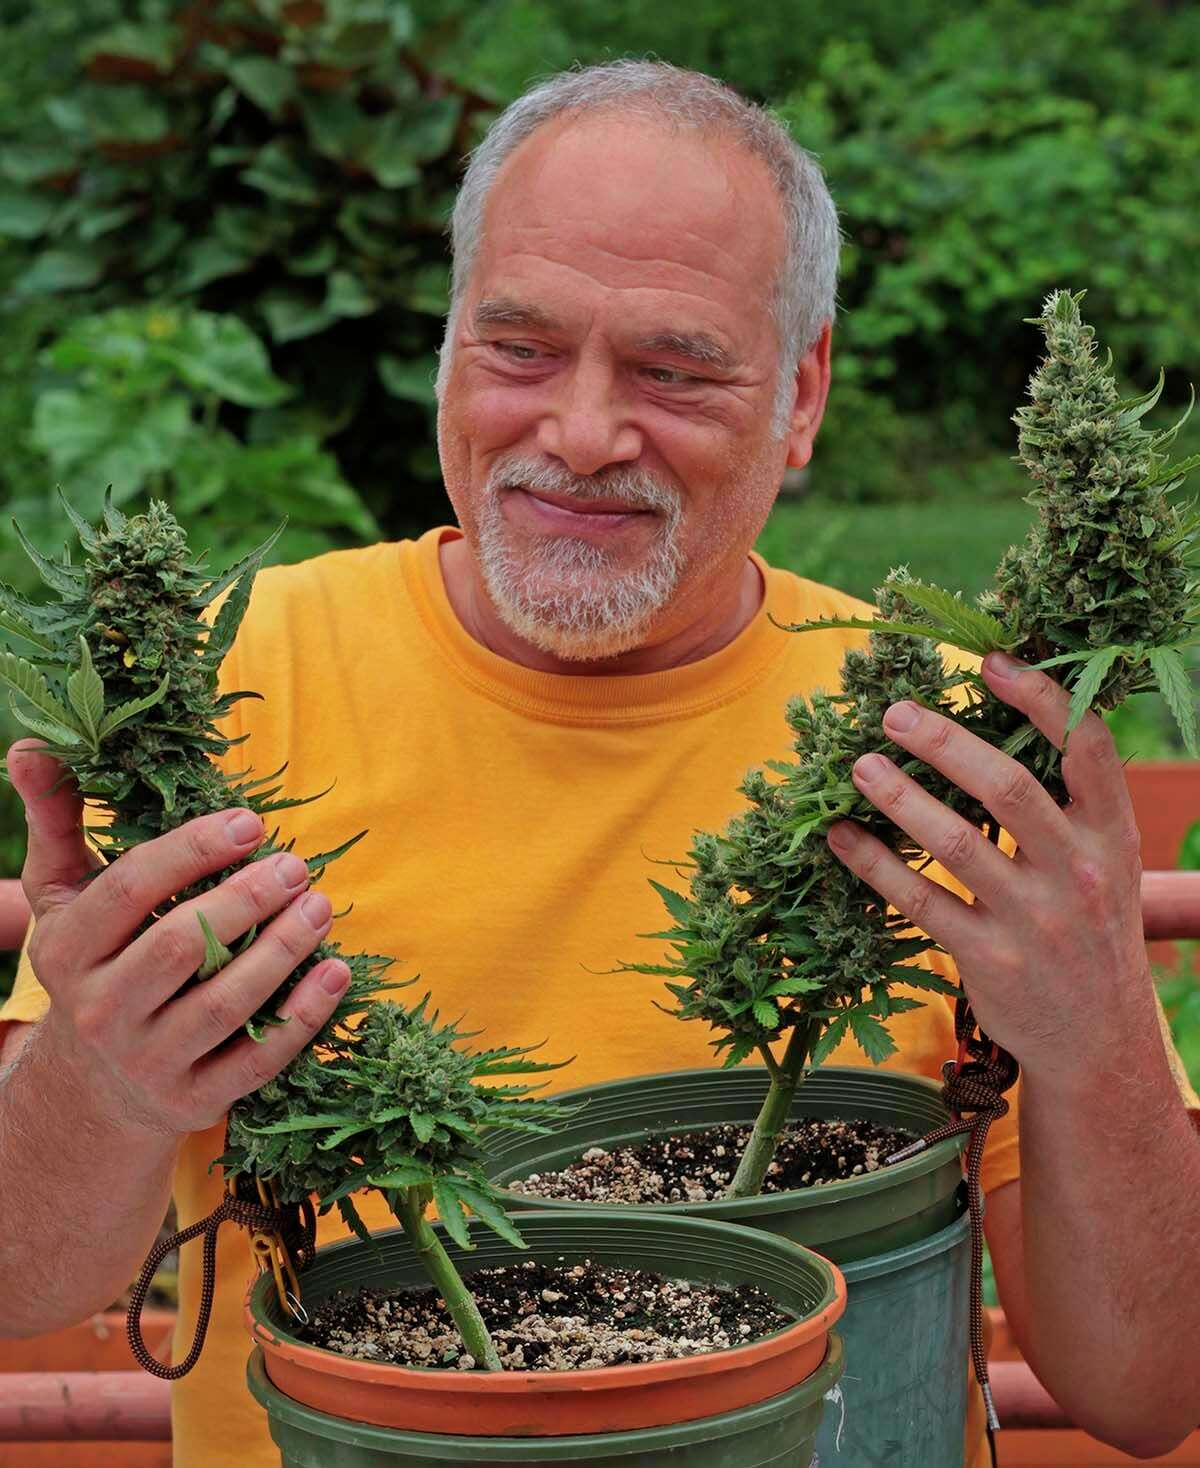 Mark Mathew Braunstein’s second crop of homegrown cannabis.